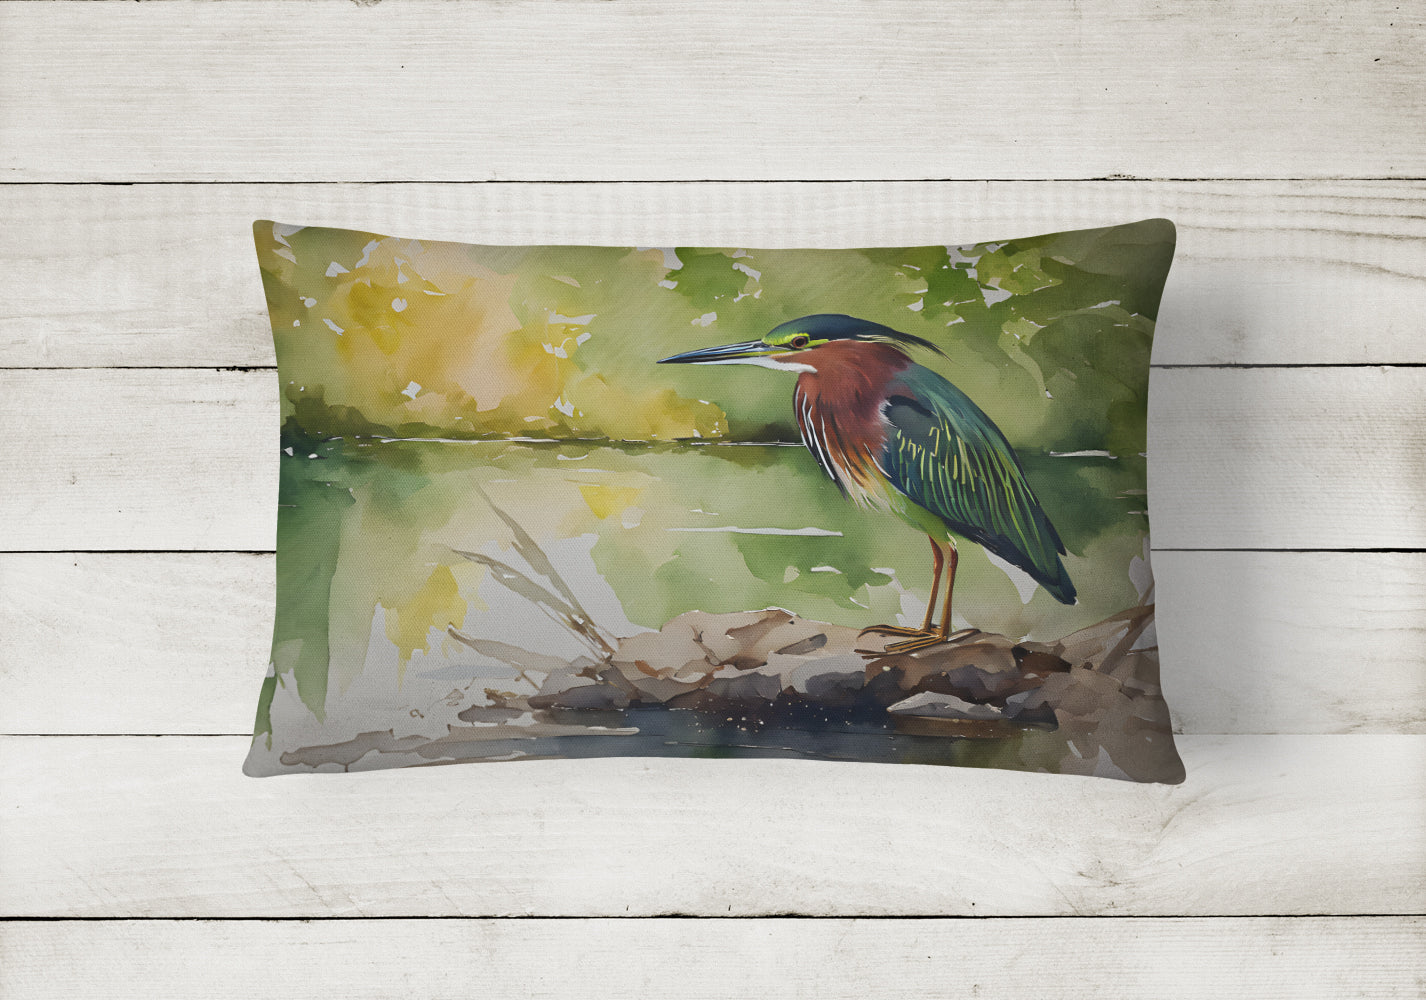 Buy this Green Heron Throw Pillow